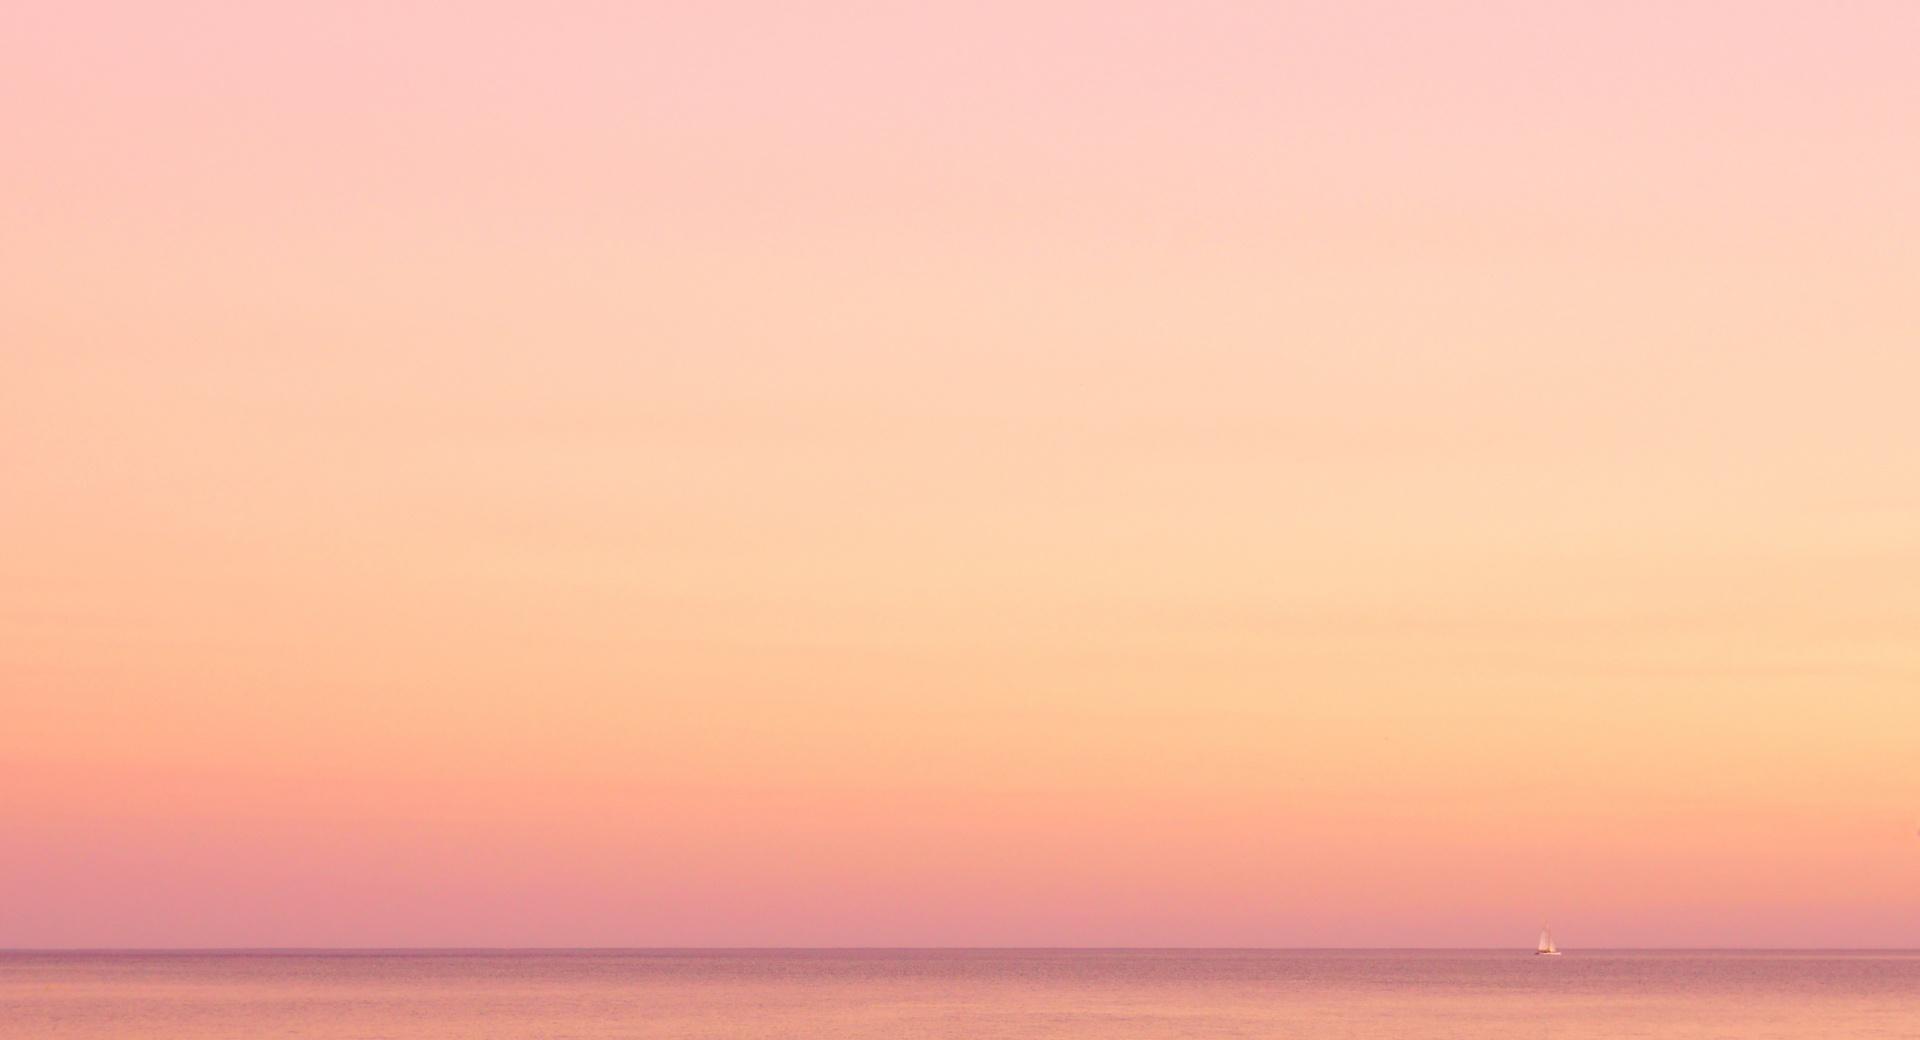 Sea Sunrise Skyline at 1024 x 1024 iPad size wallpapers HD quality